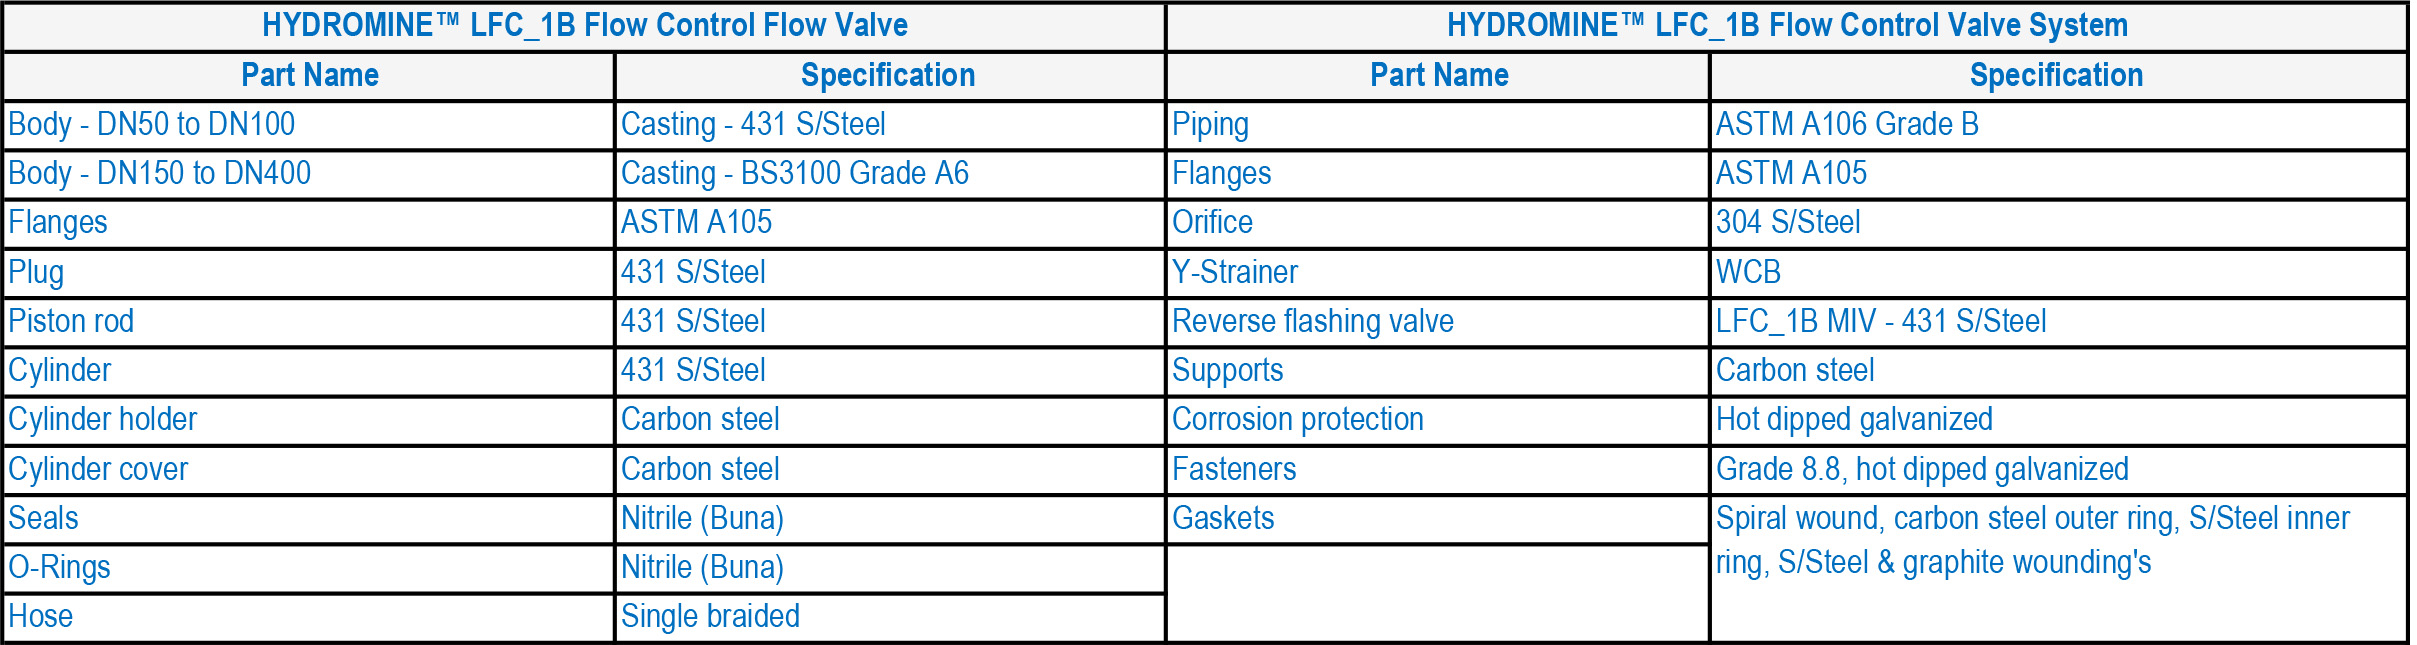 HYDROMINE LFC 1B Flow Control Valve System Parts